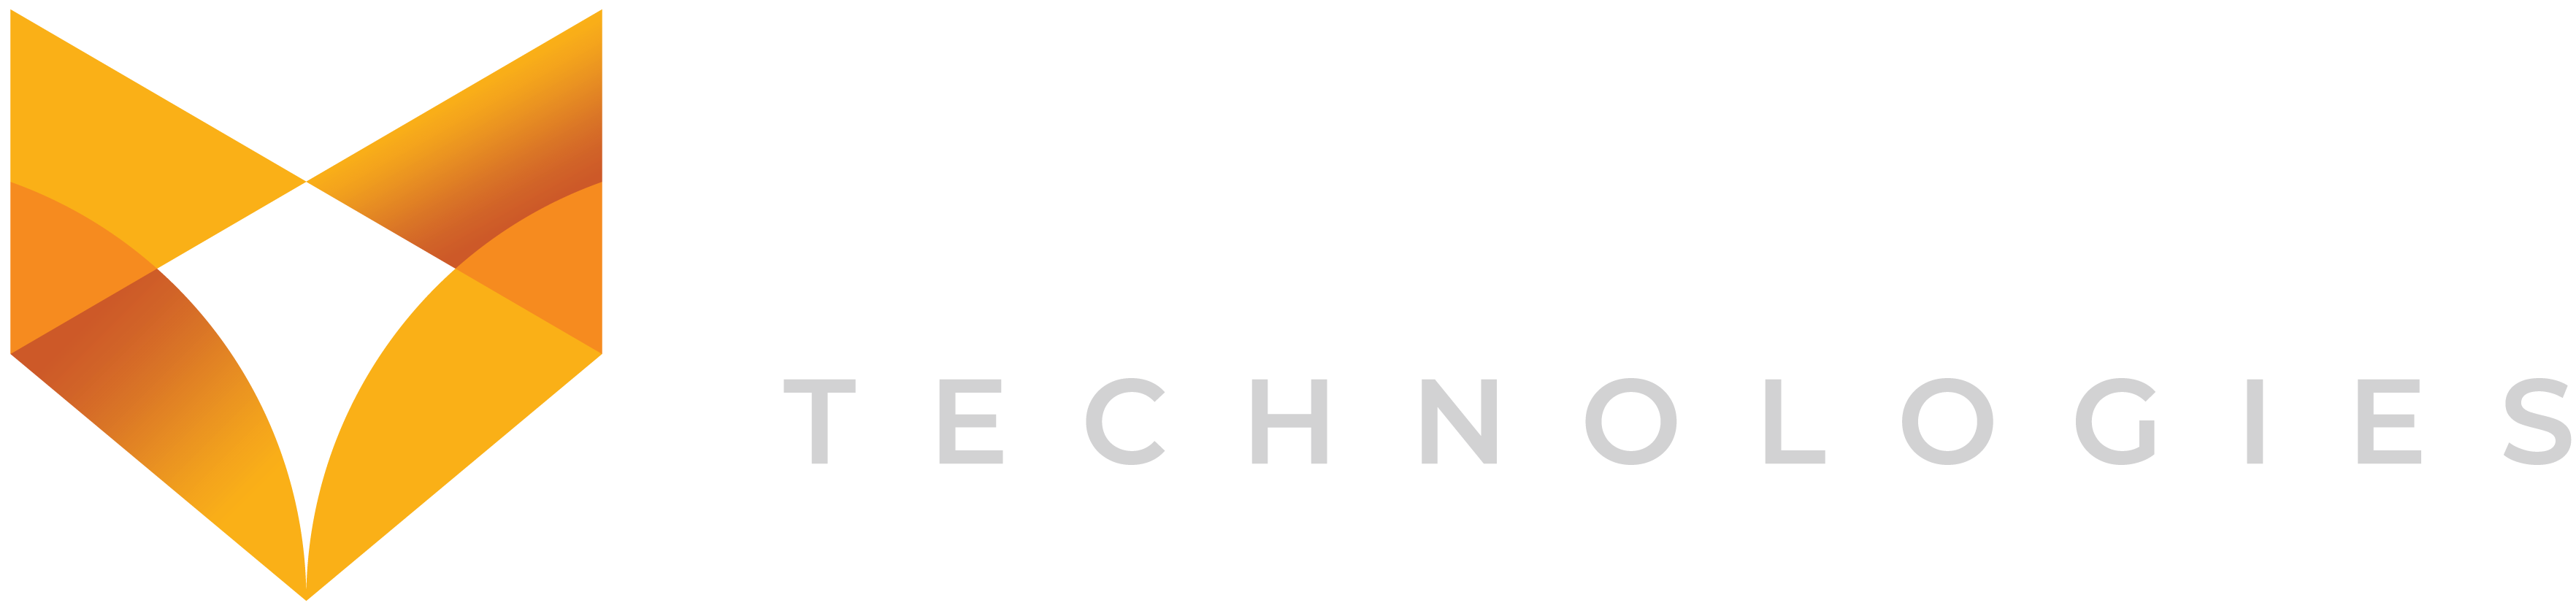 Paperfox Technologies